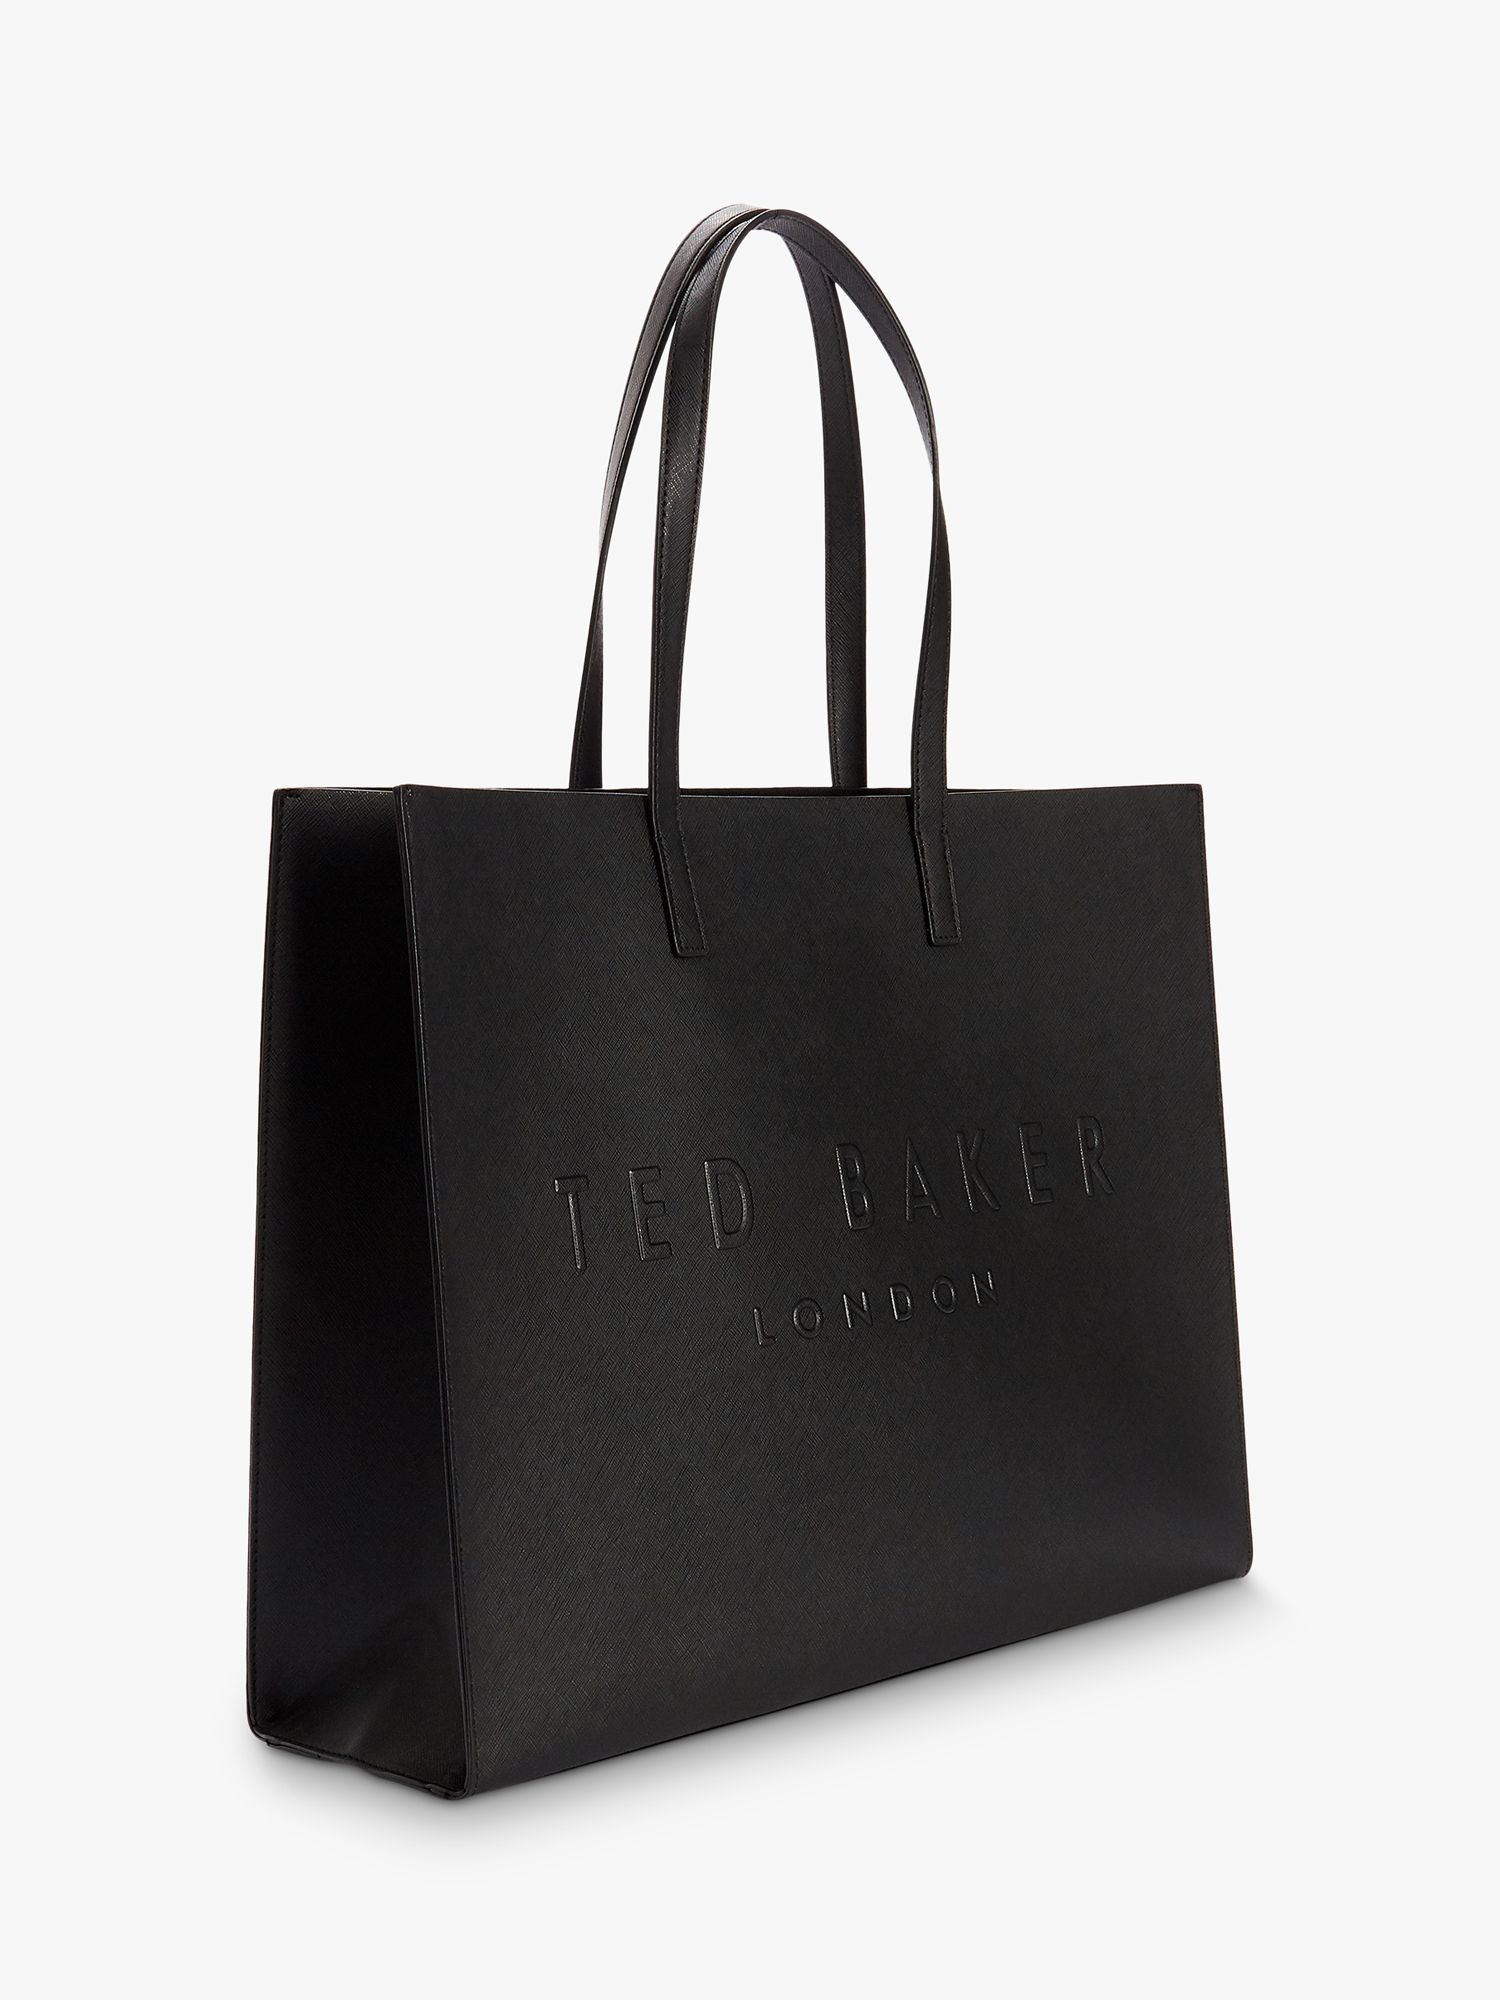 Ted Baker Sukicon Large Icon Shopper Bag, Black at John Lewis & Partners